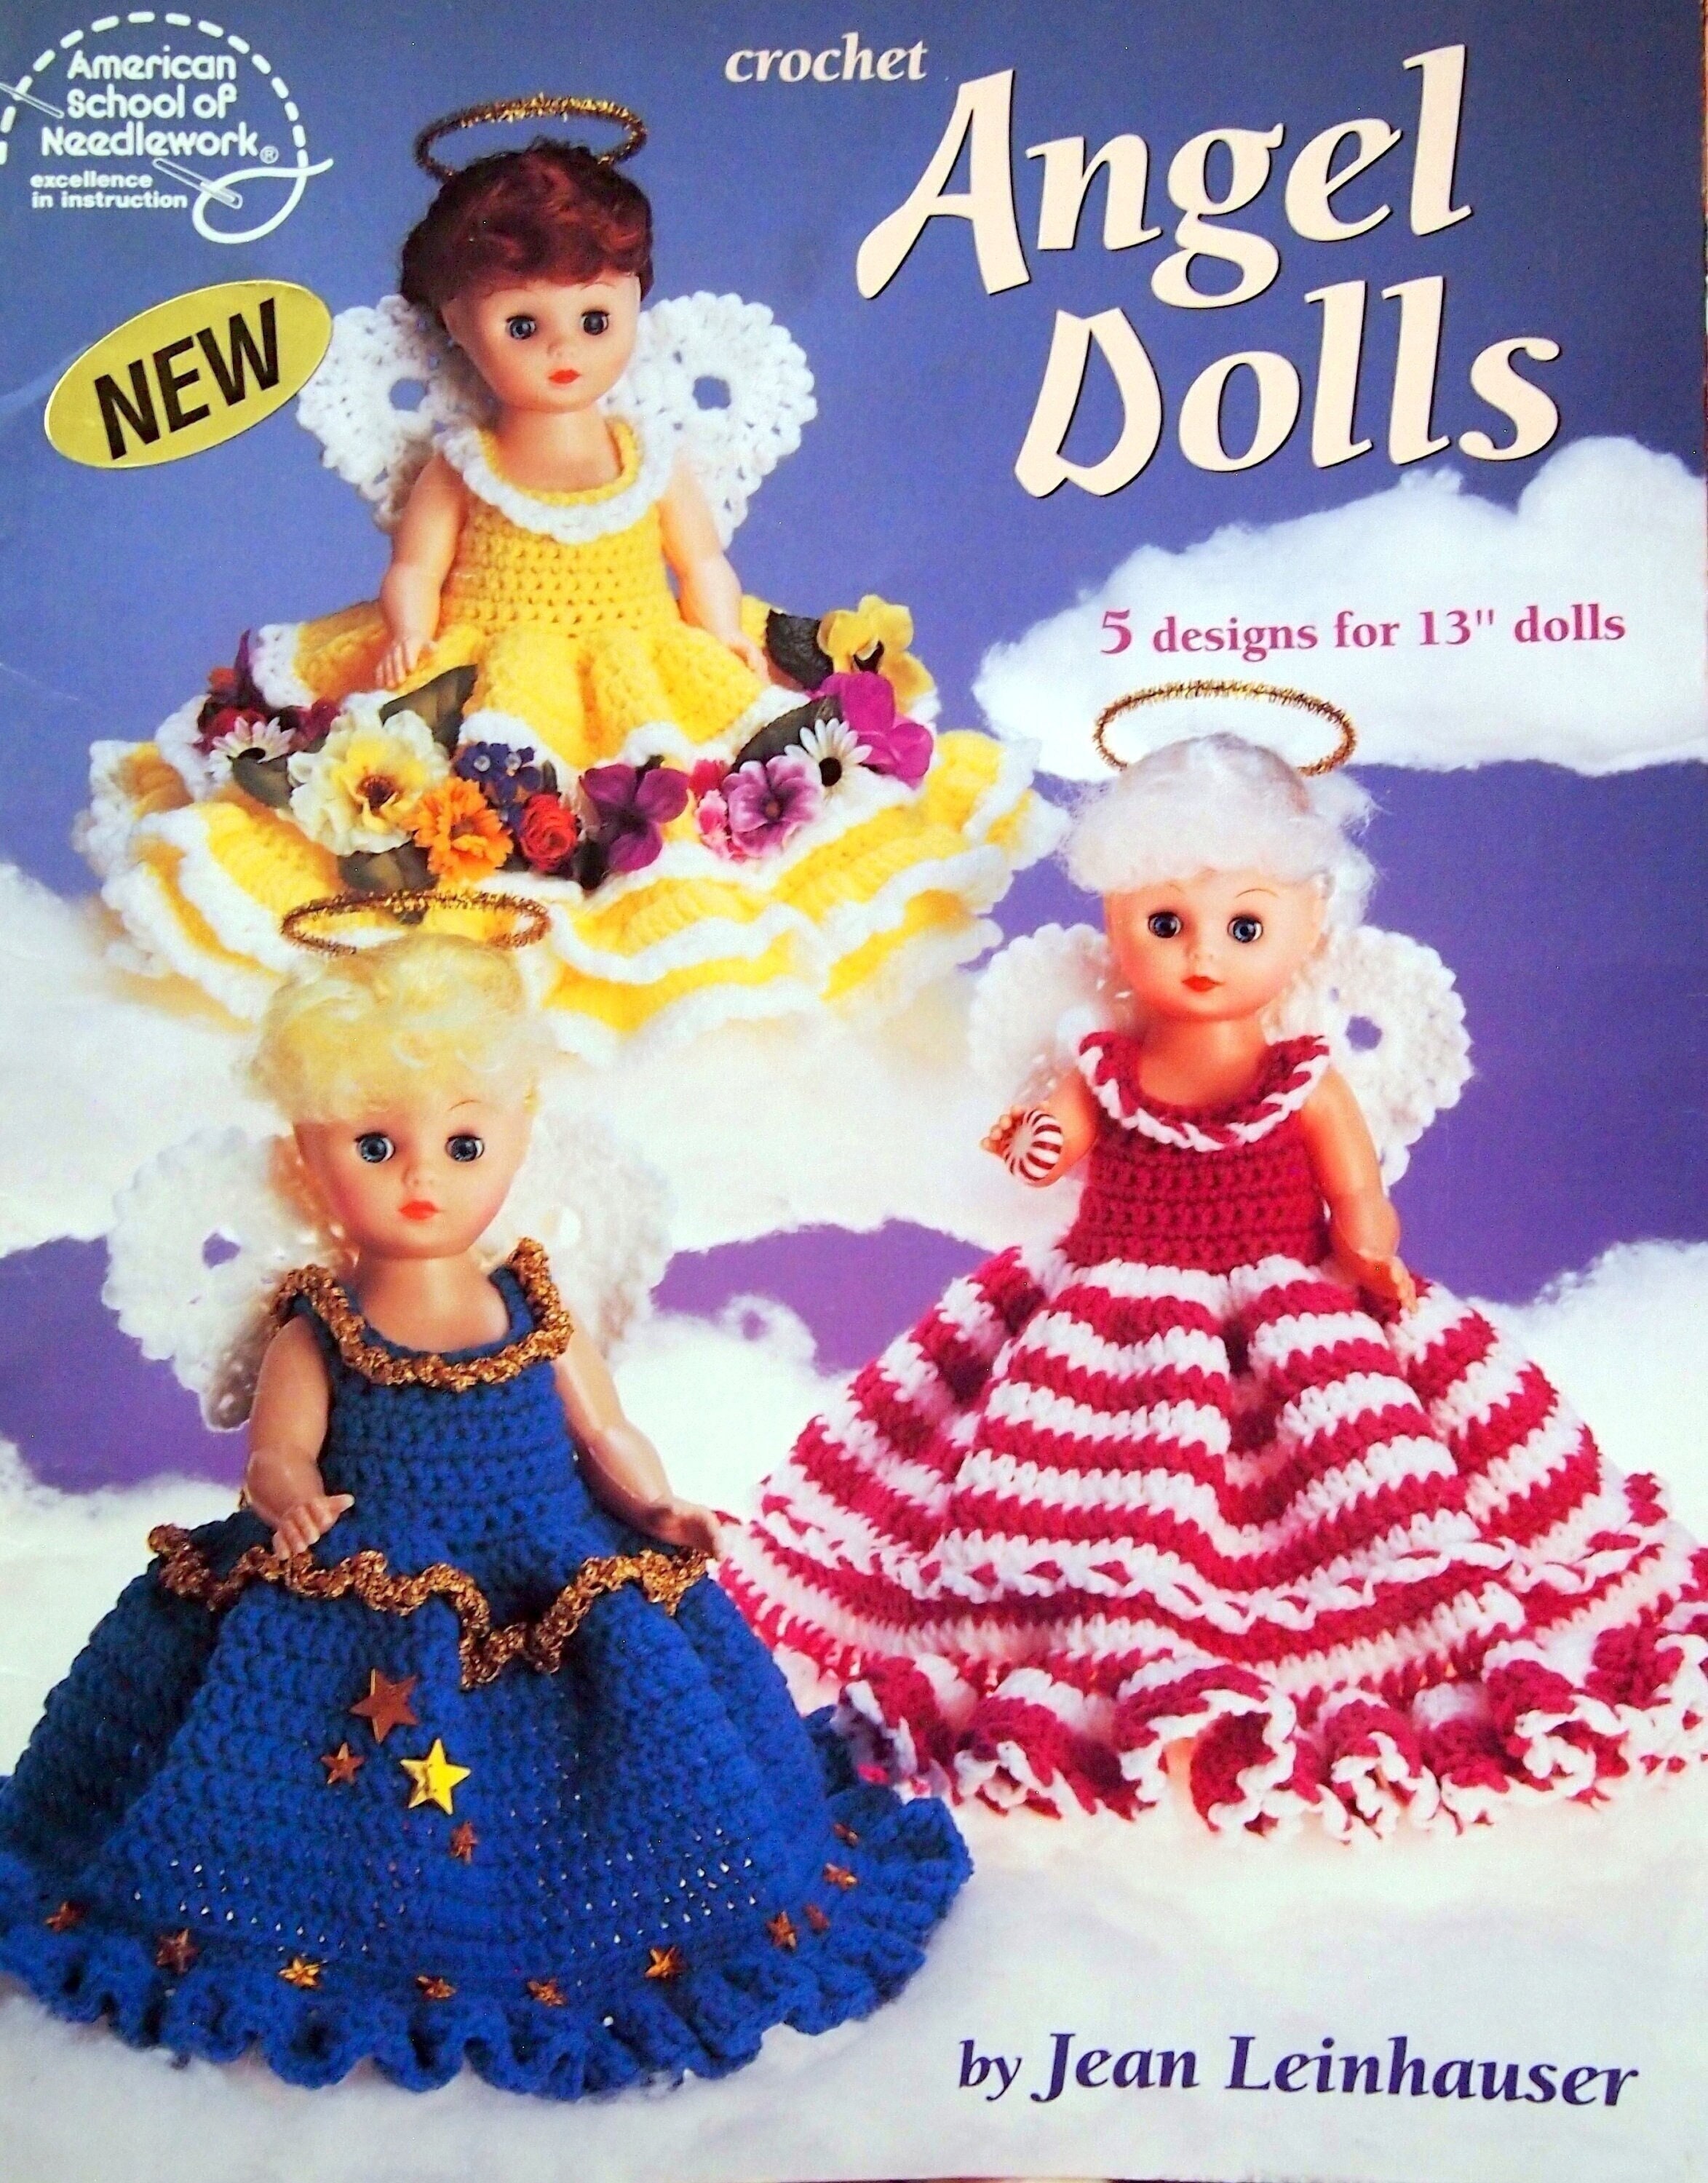 American School of Needlework Crochet Doll Pattern Angel Dolls 5 Designs 13\u201d doll Original pattern